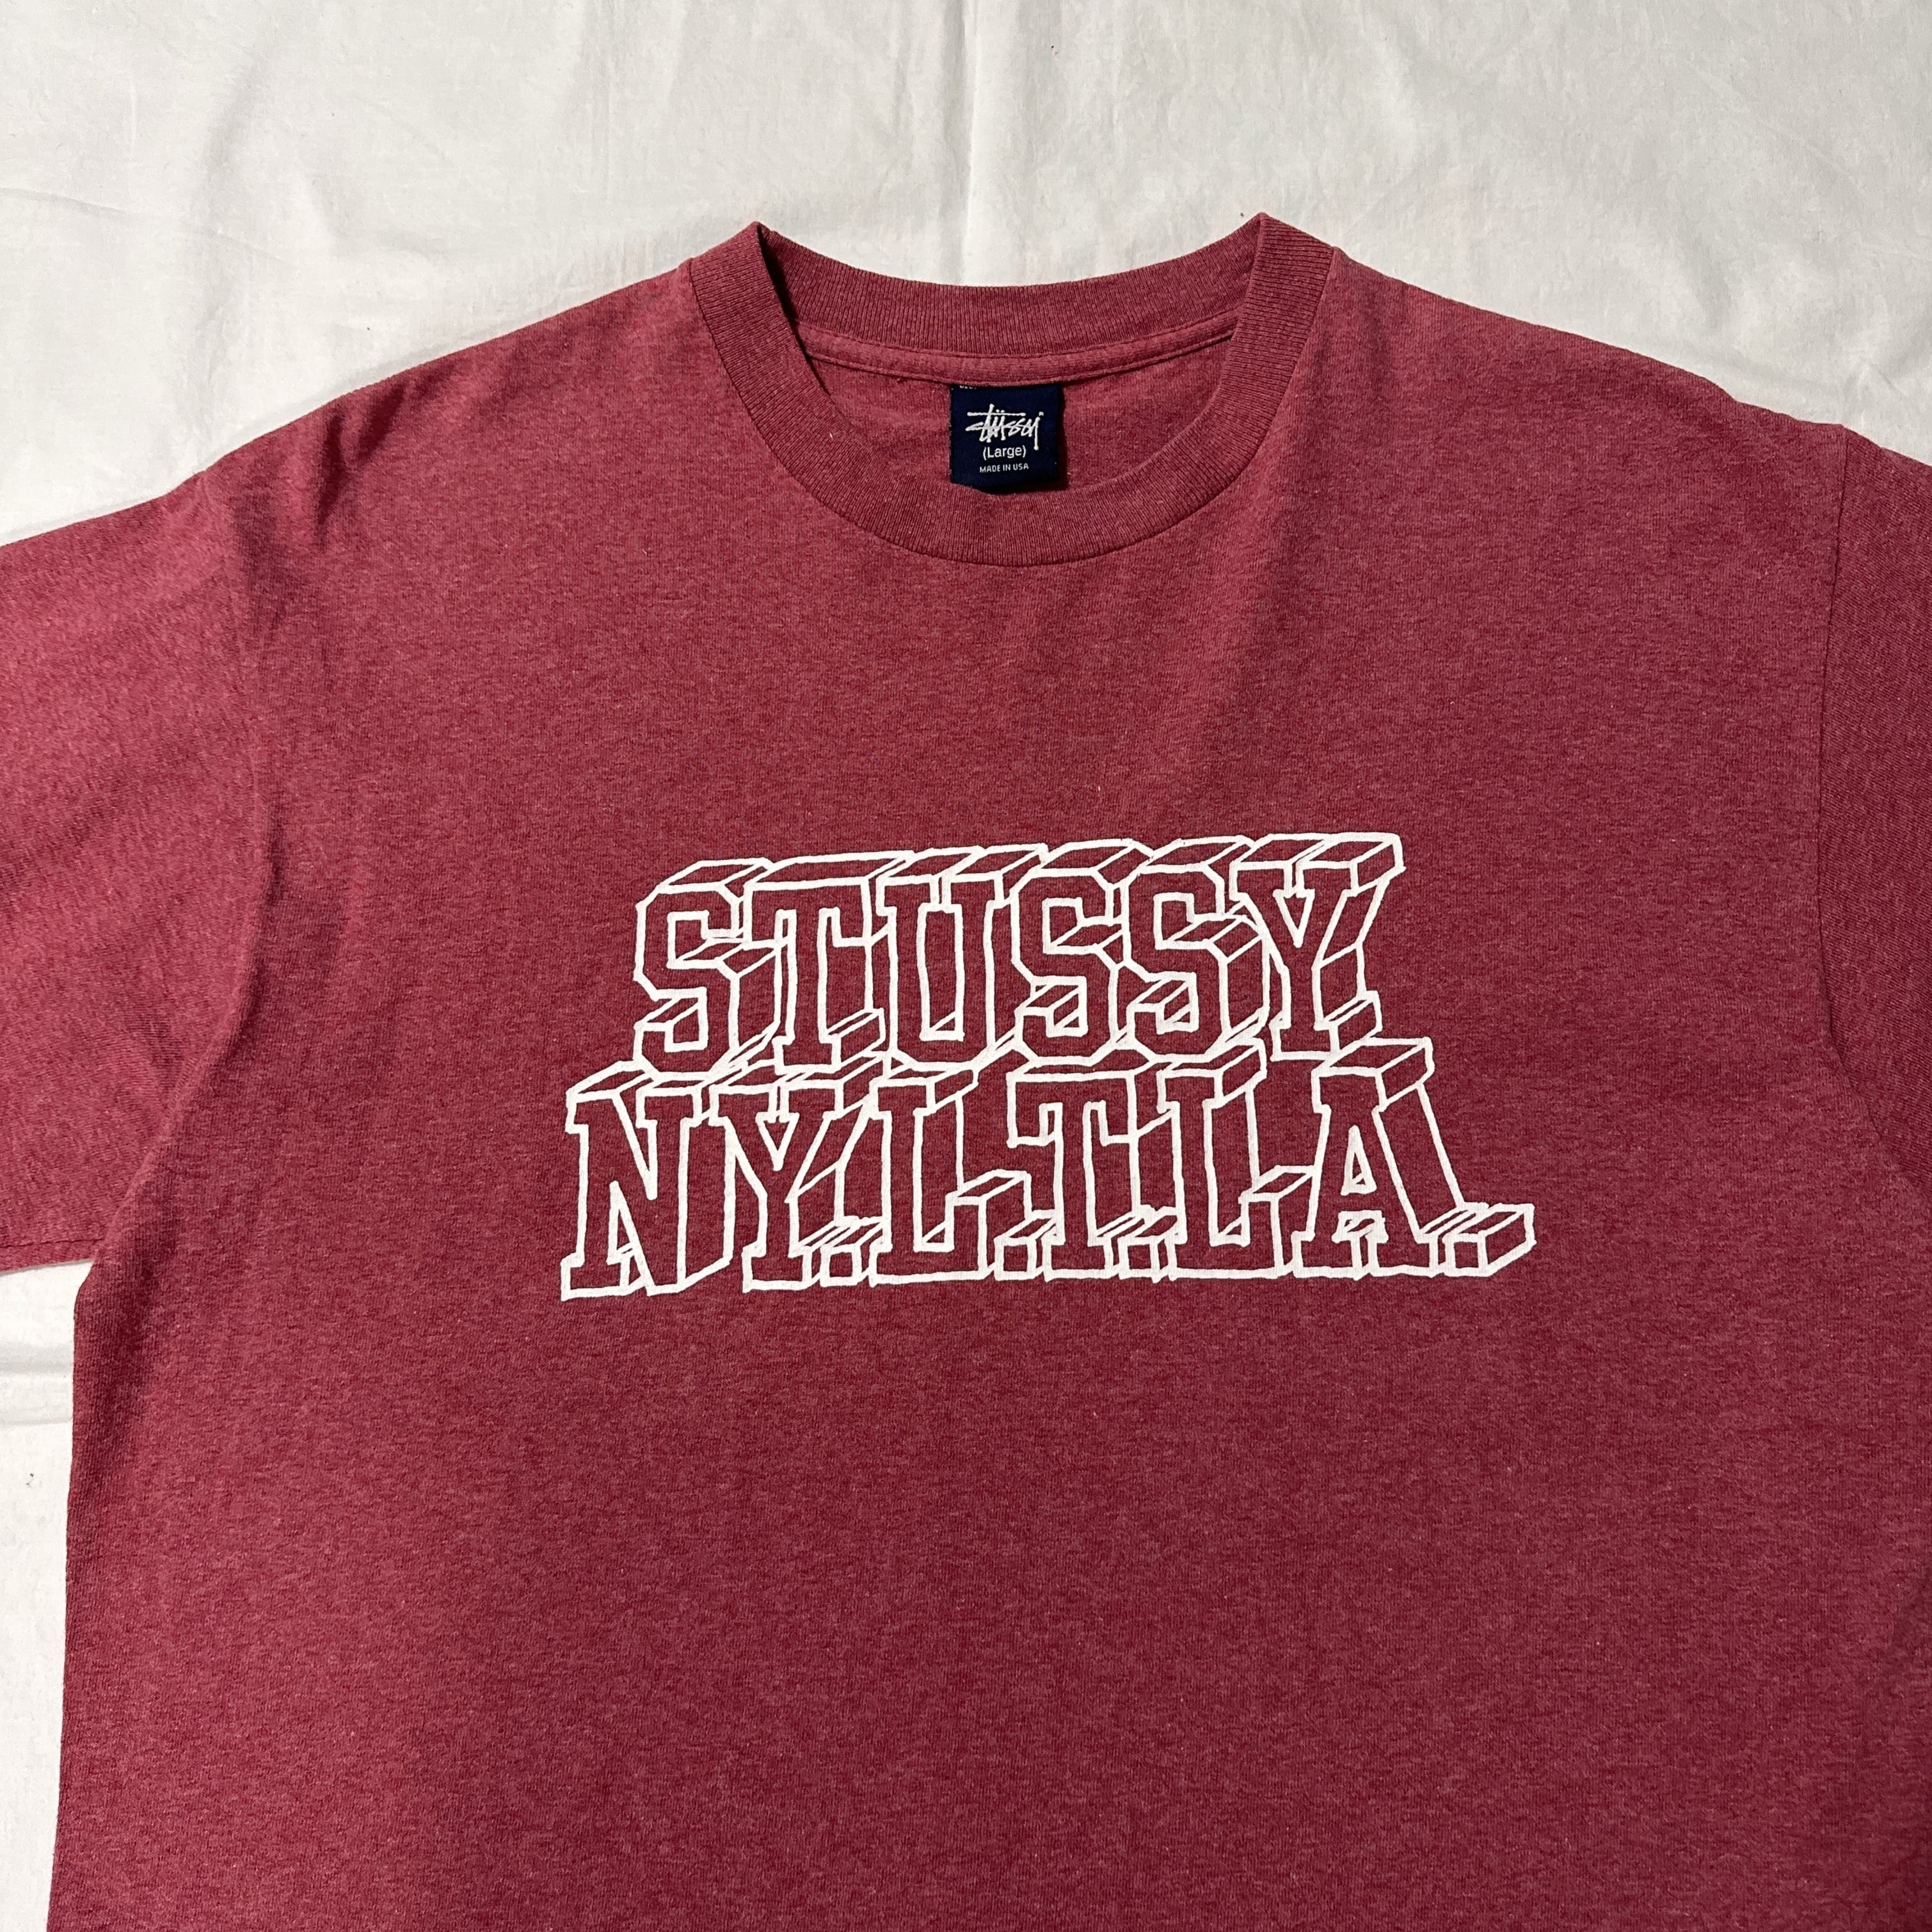 made in USA    stussy 90s スティューシー　Tシャツ　L